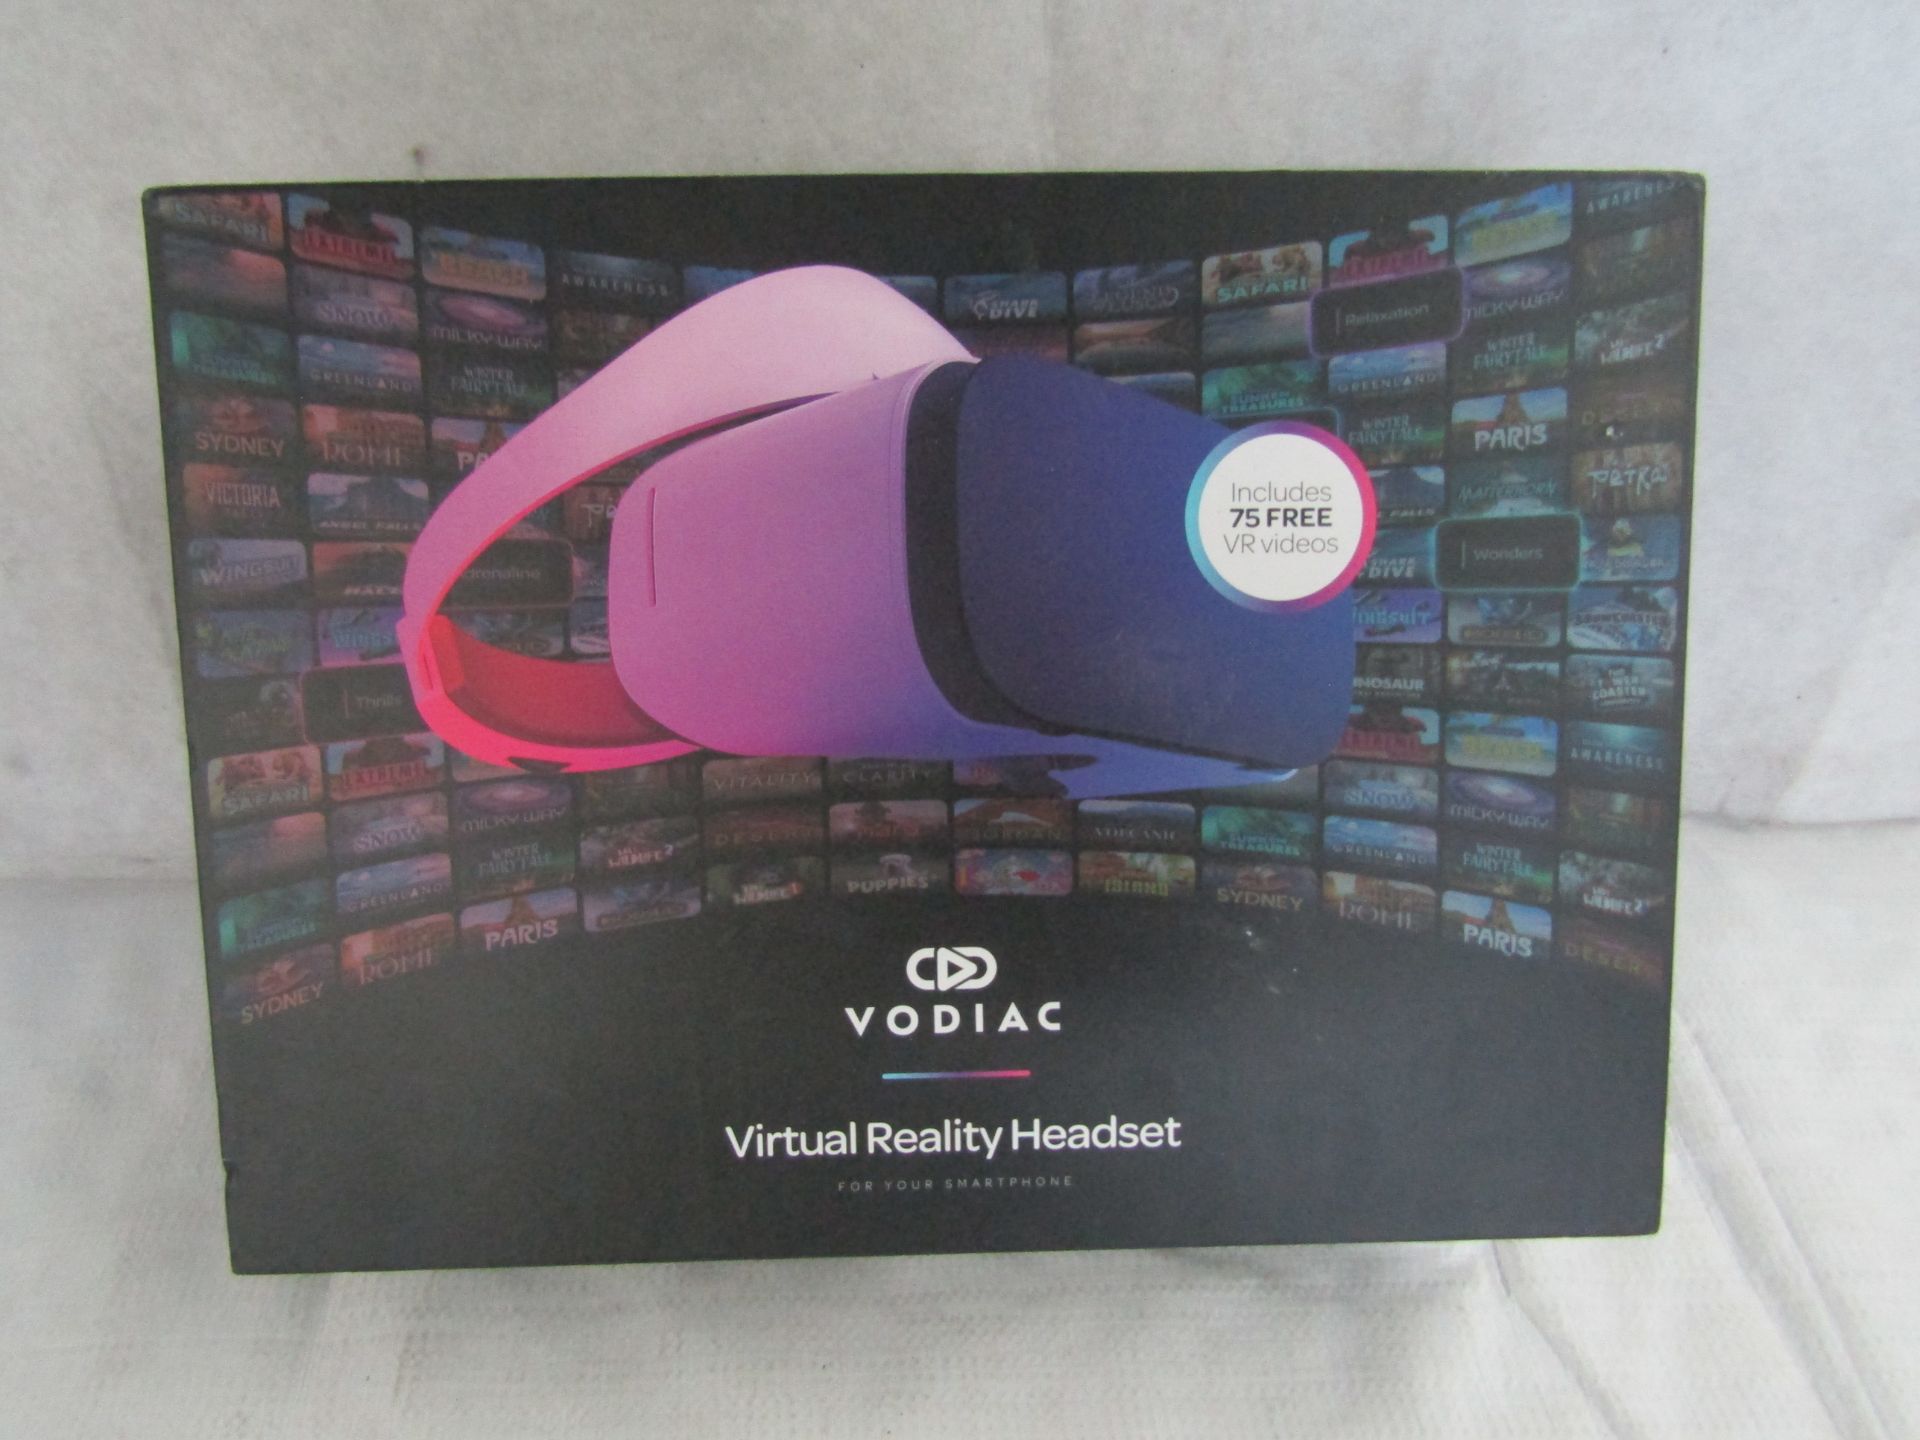 Vodiac VR - Virtual Reality Goggles, 75 Free VR Videos & More via The Vodiac in-App Streaming